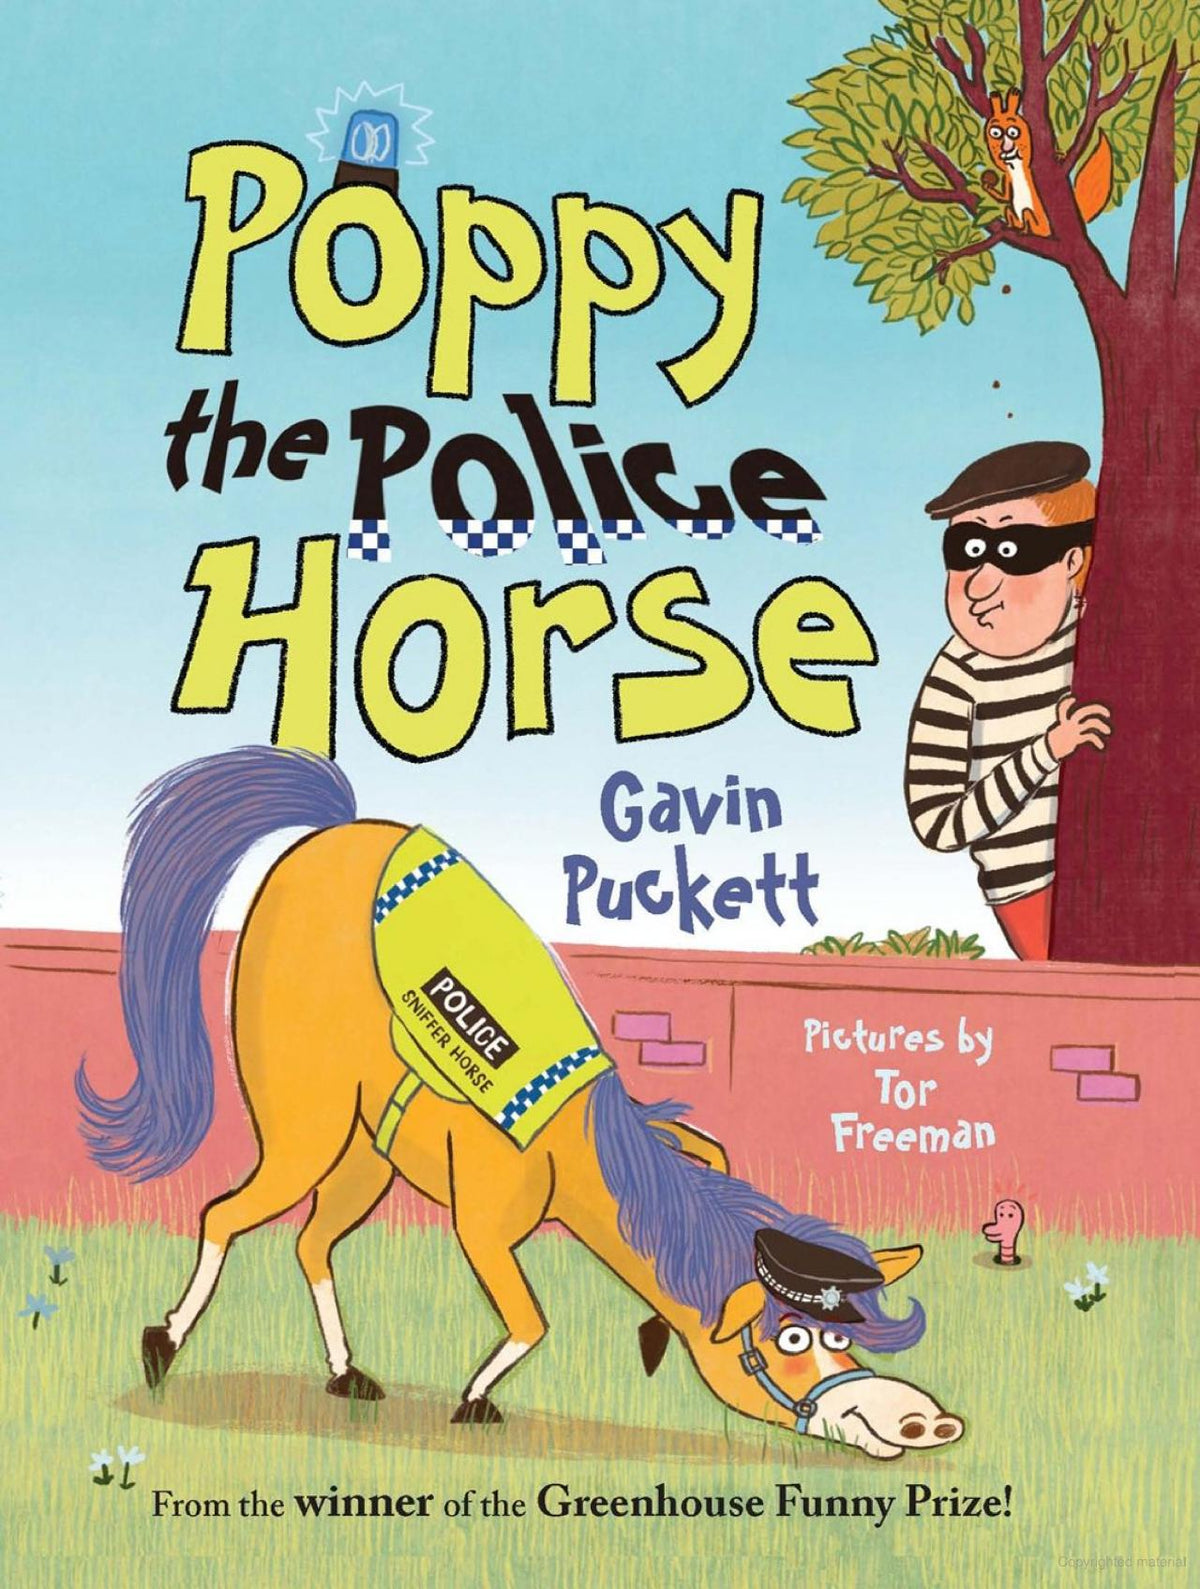 Poppy the Police horse